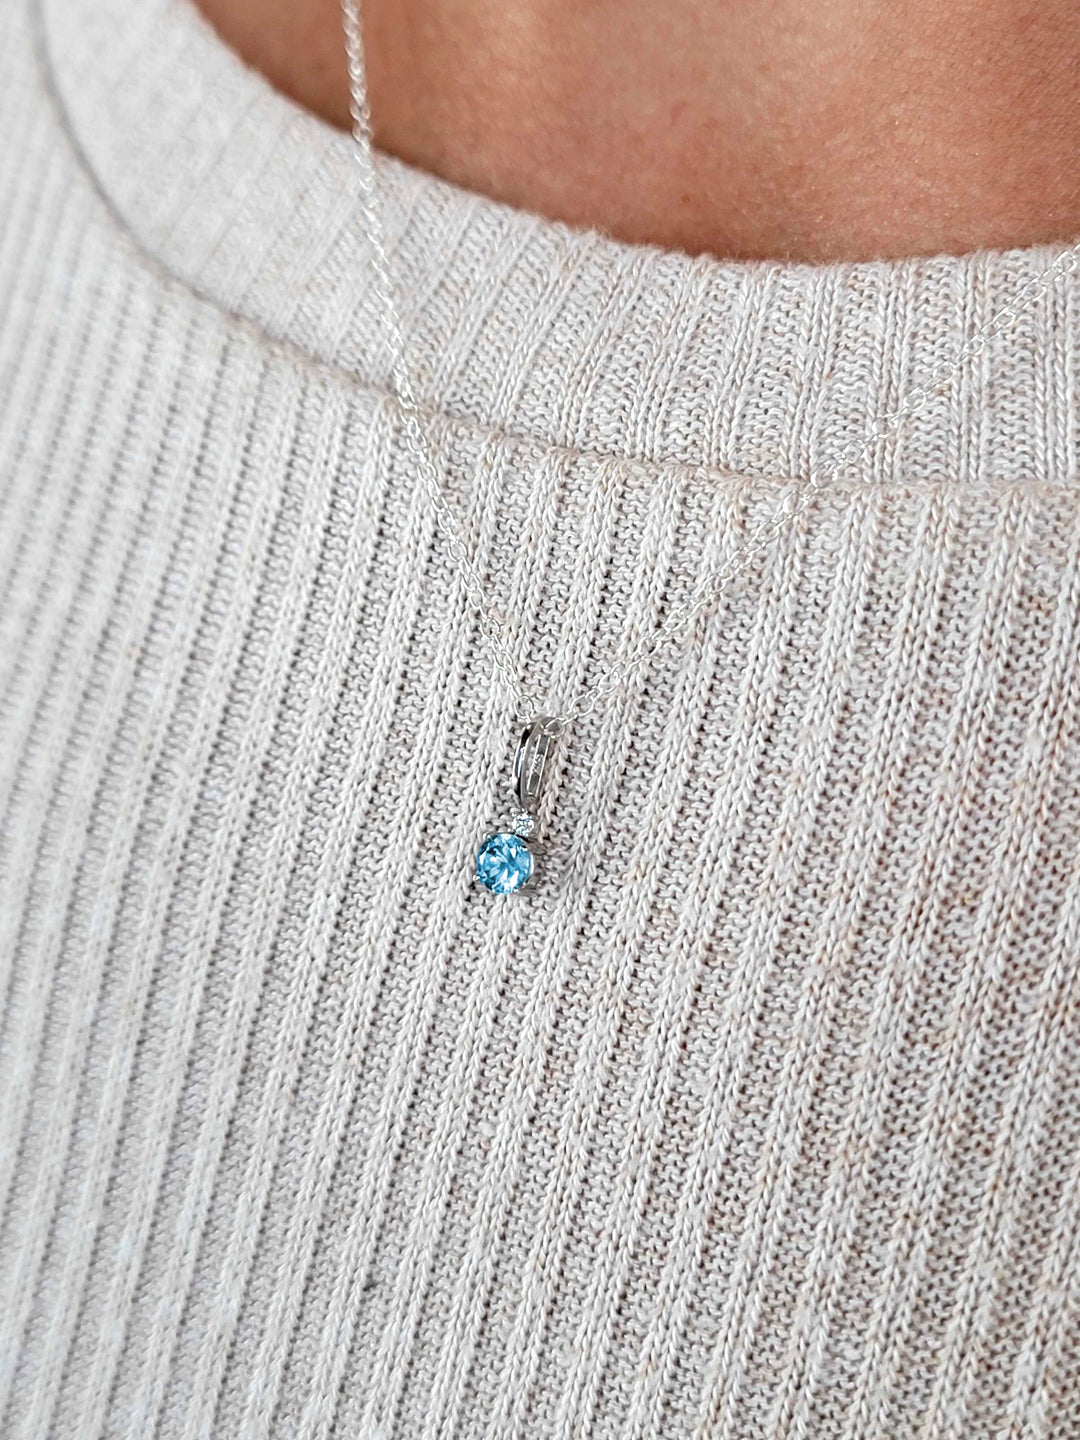 Blue Zircon Pendant Necklace Anniversary Gifts